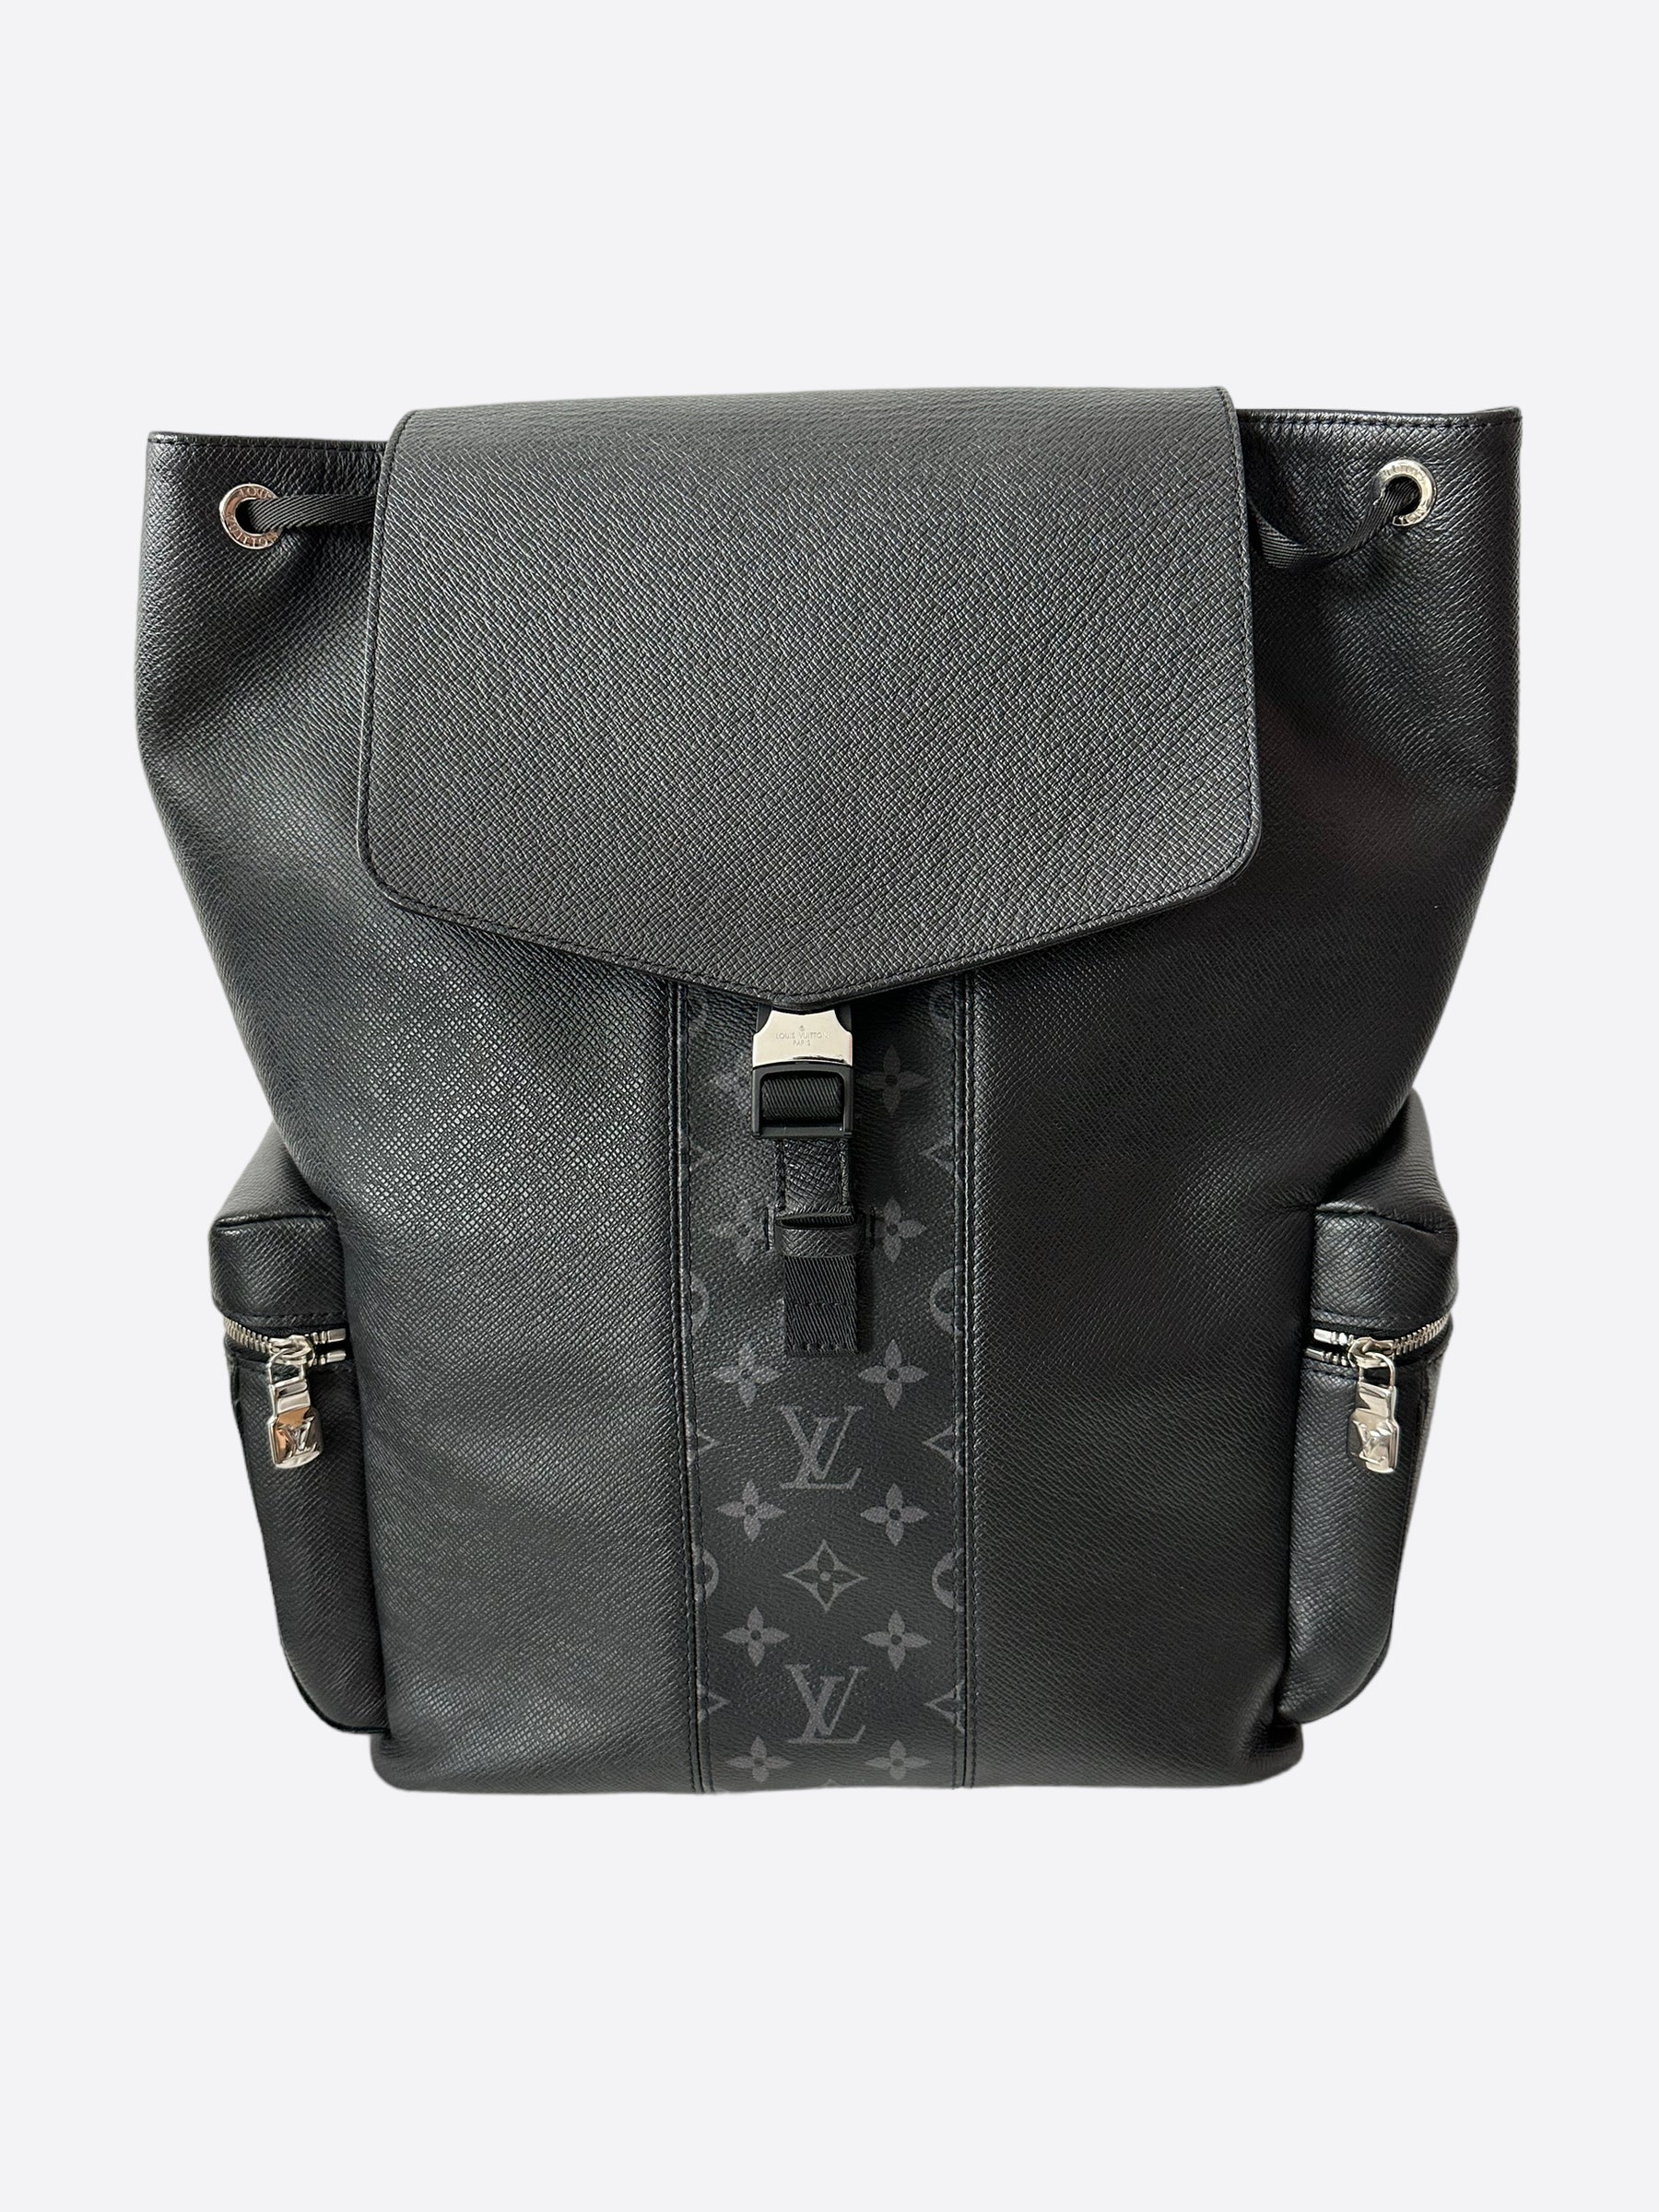 Louis Vuitton Backpack Rucksack Trio Monogram Black men's bag